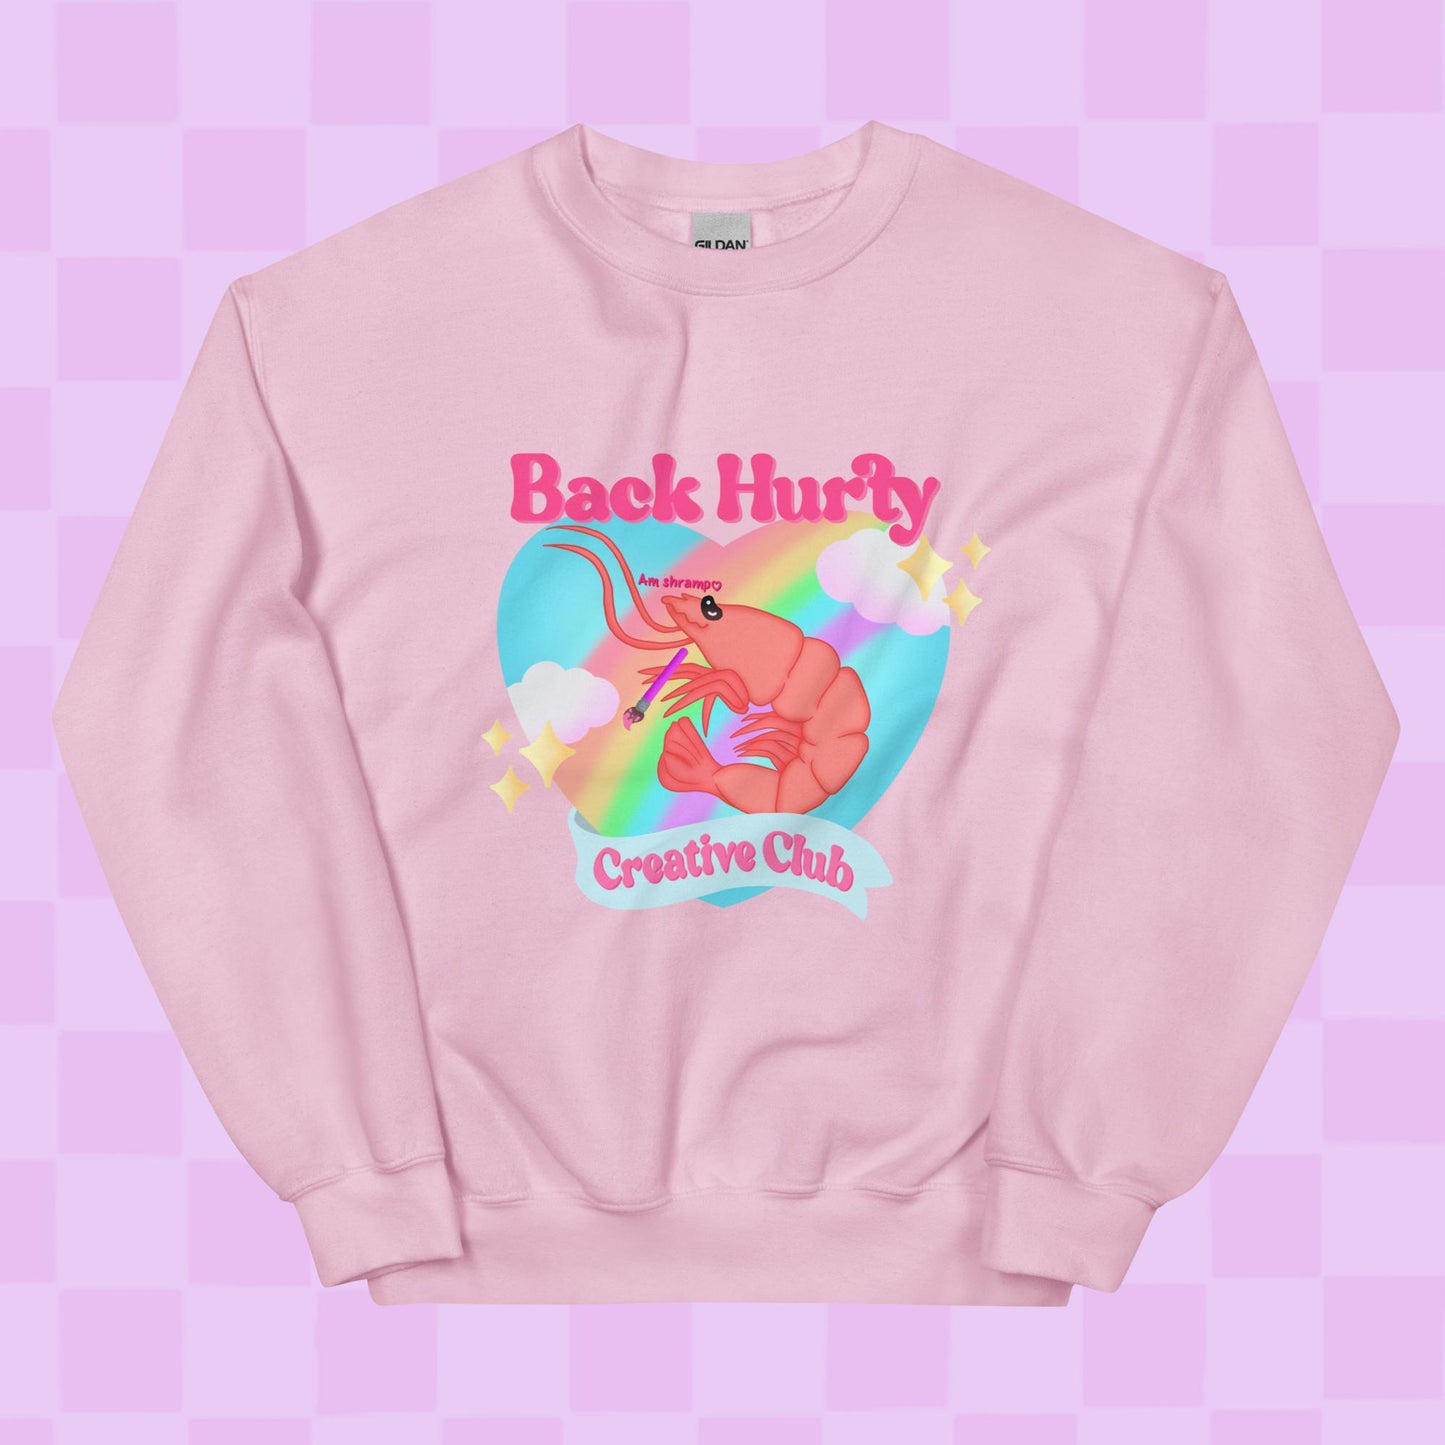 Back hurty creative club unisex sweatshirt